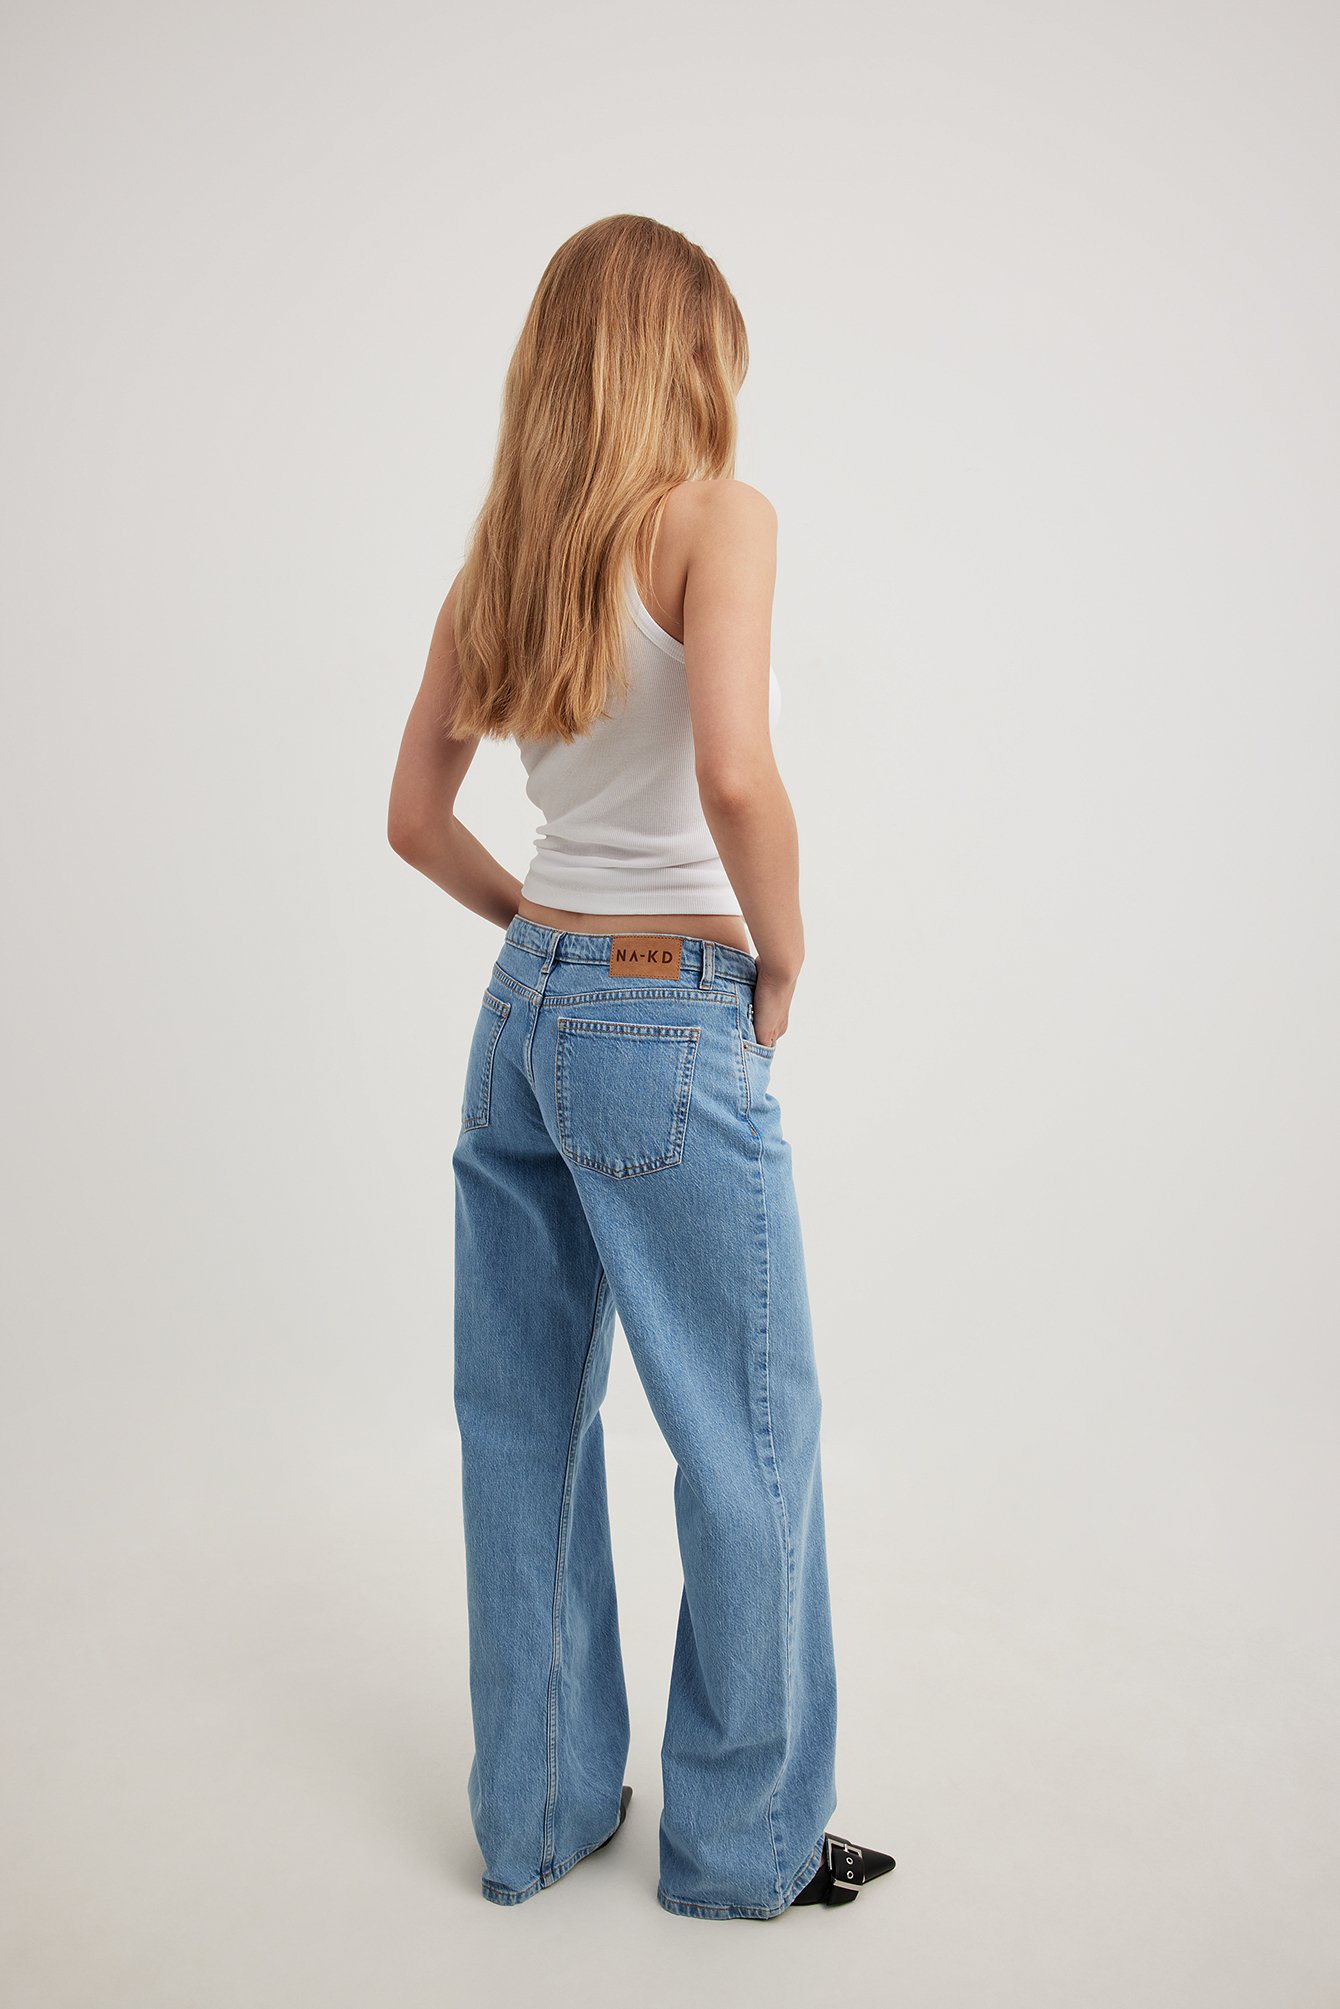 https://www.na-kd.com/globalassets/super_low_waist_jeans-1018-008235-004784262.jpg?ref=83575A159F